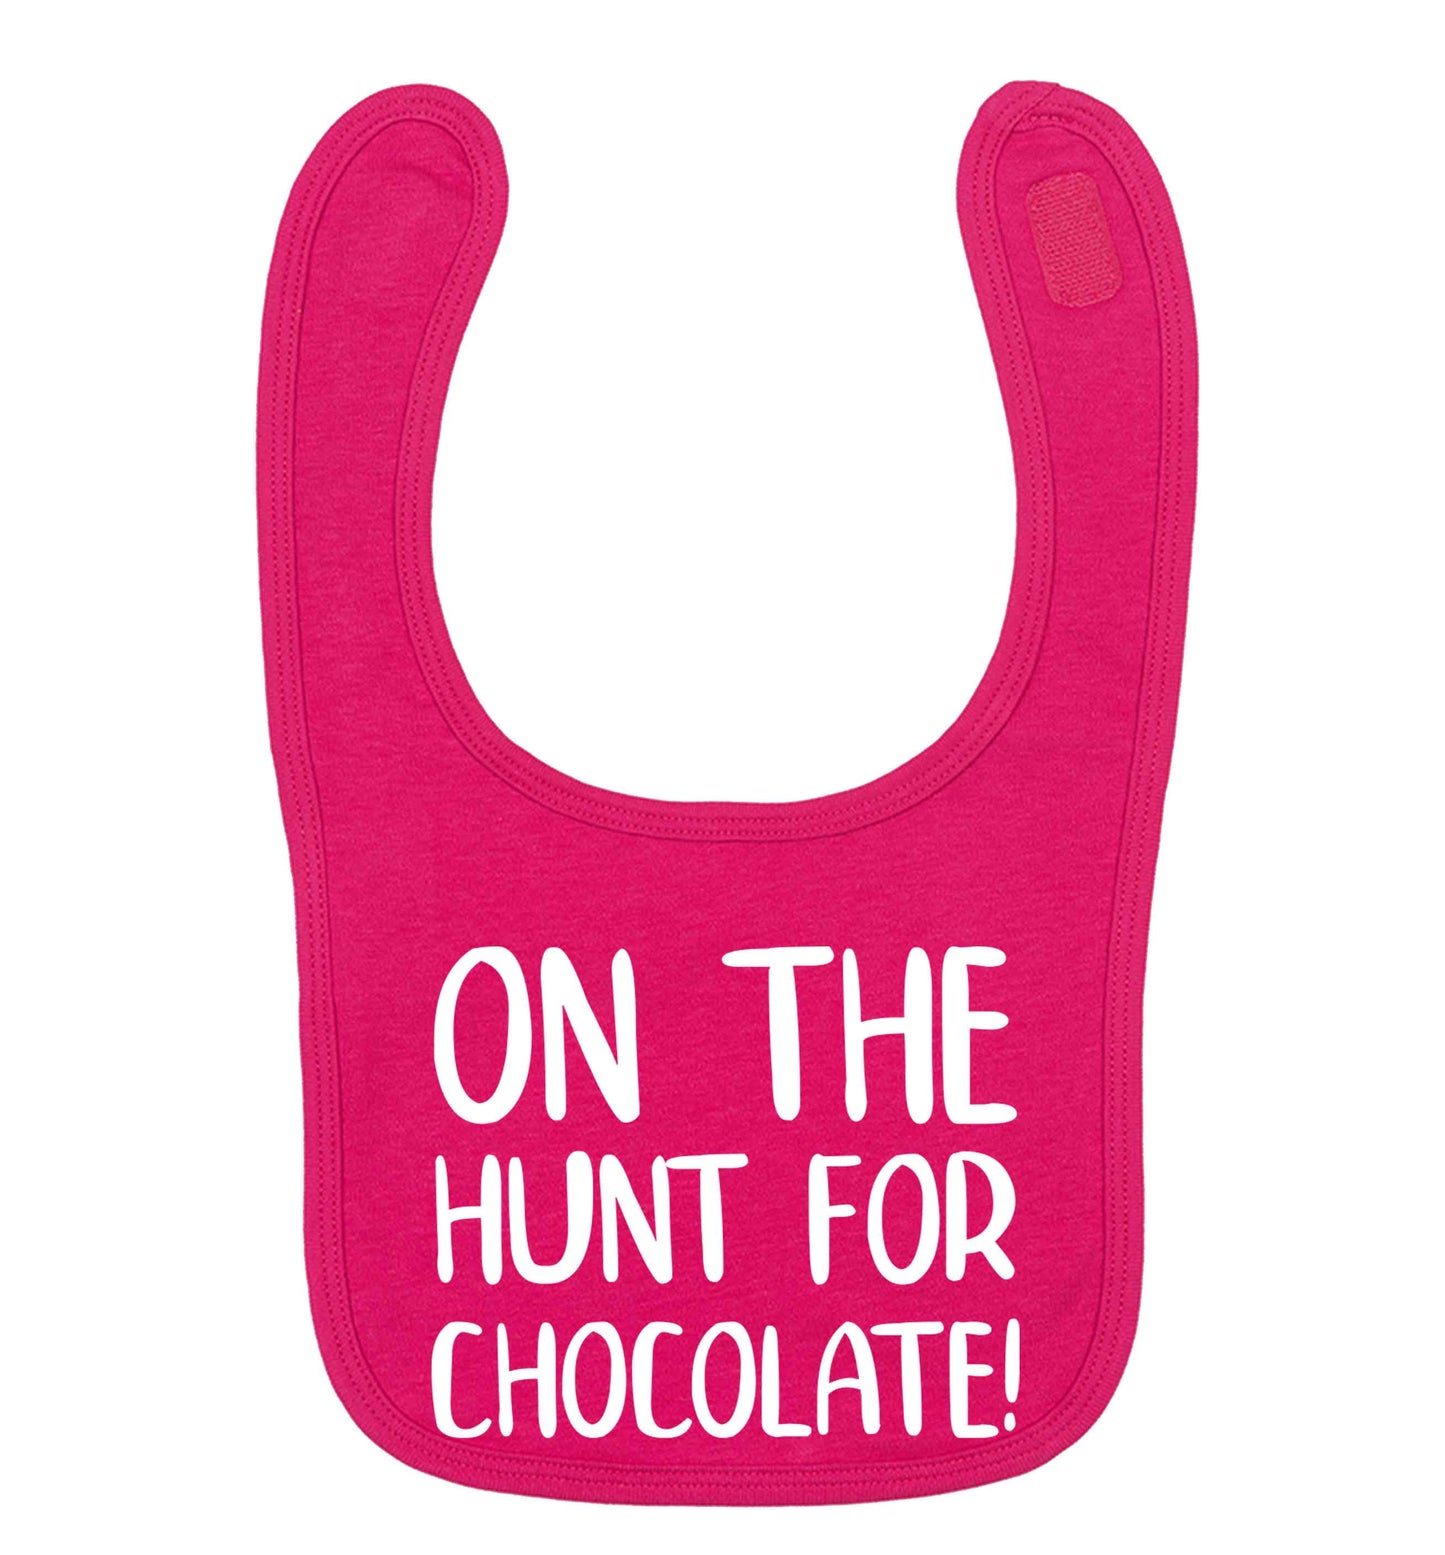 On the hunt for chocolate! dark pink baby bib